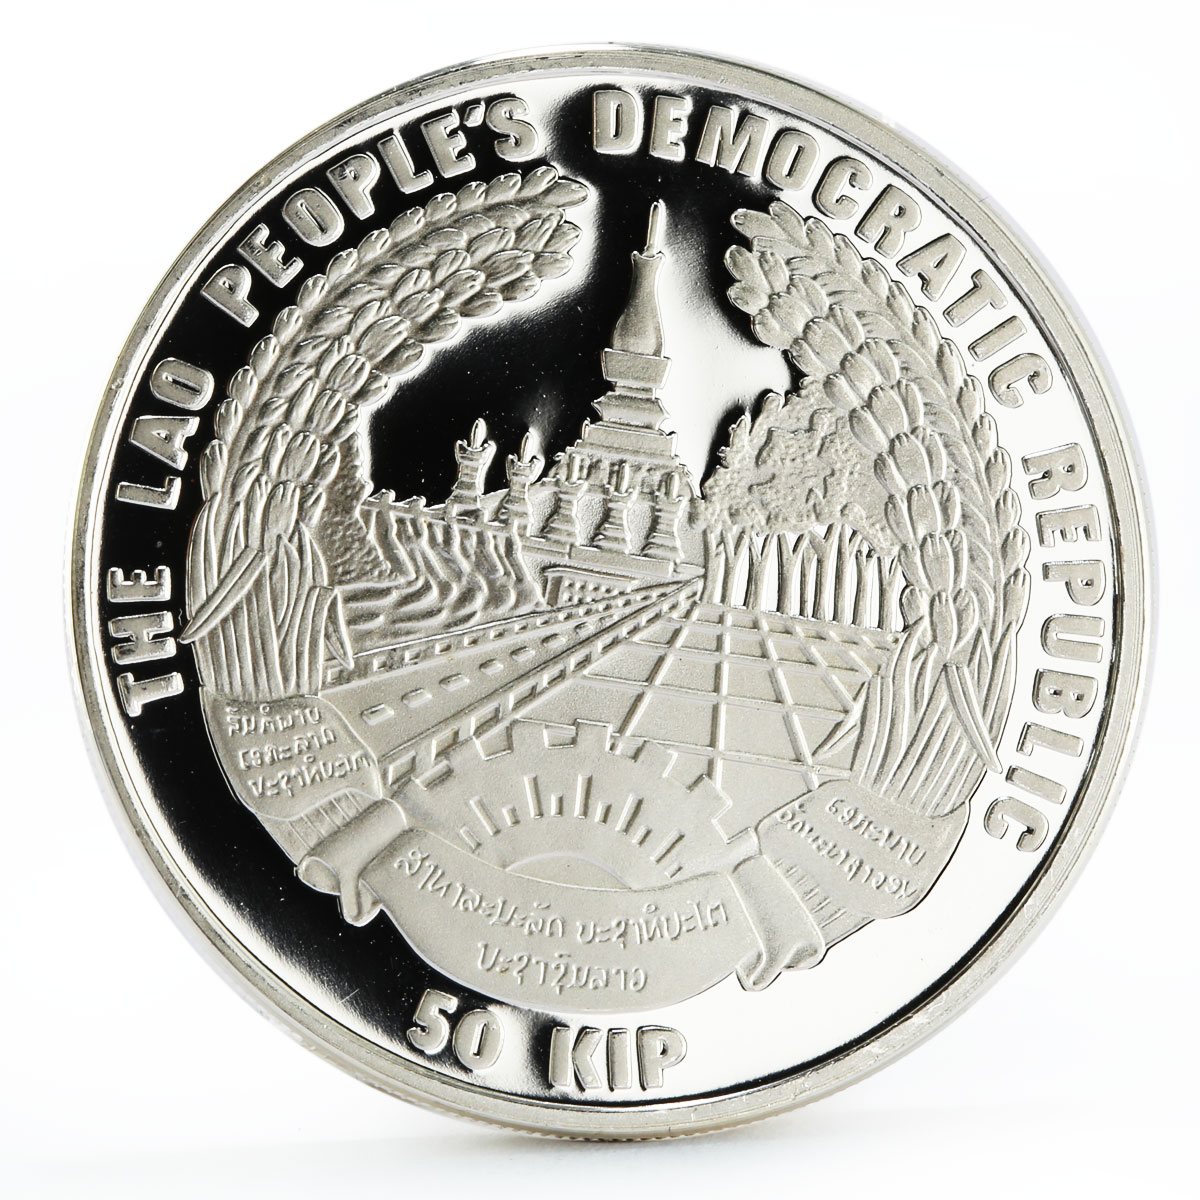 Laos 50 kip World Food Summit in Rome silver coin 1996